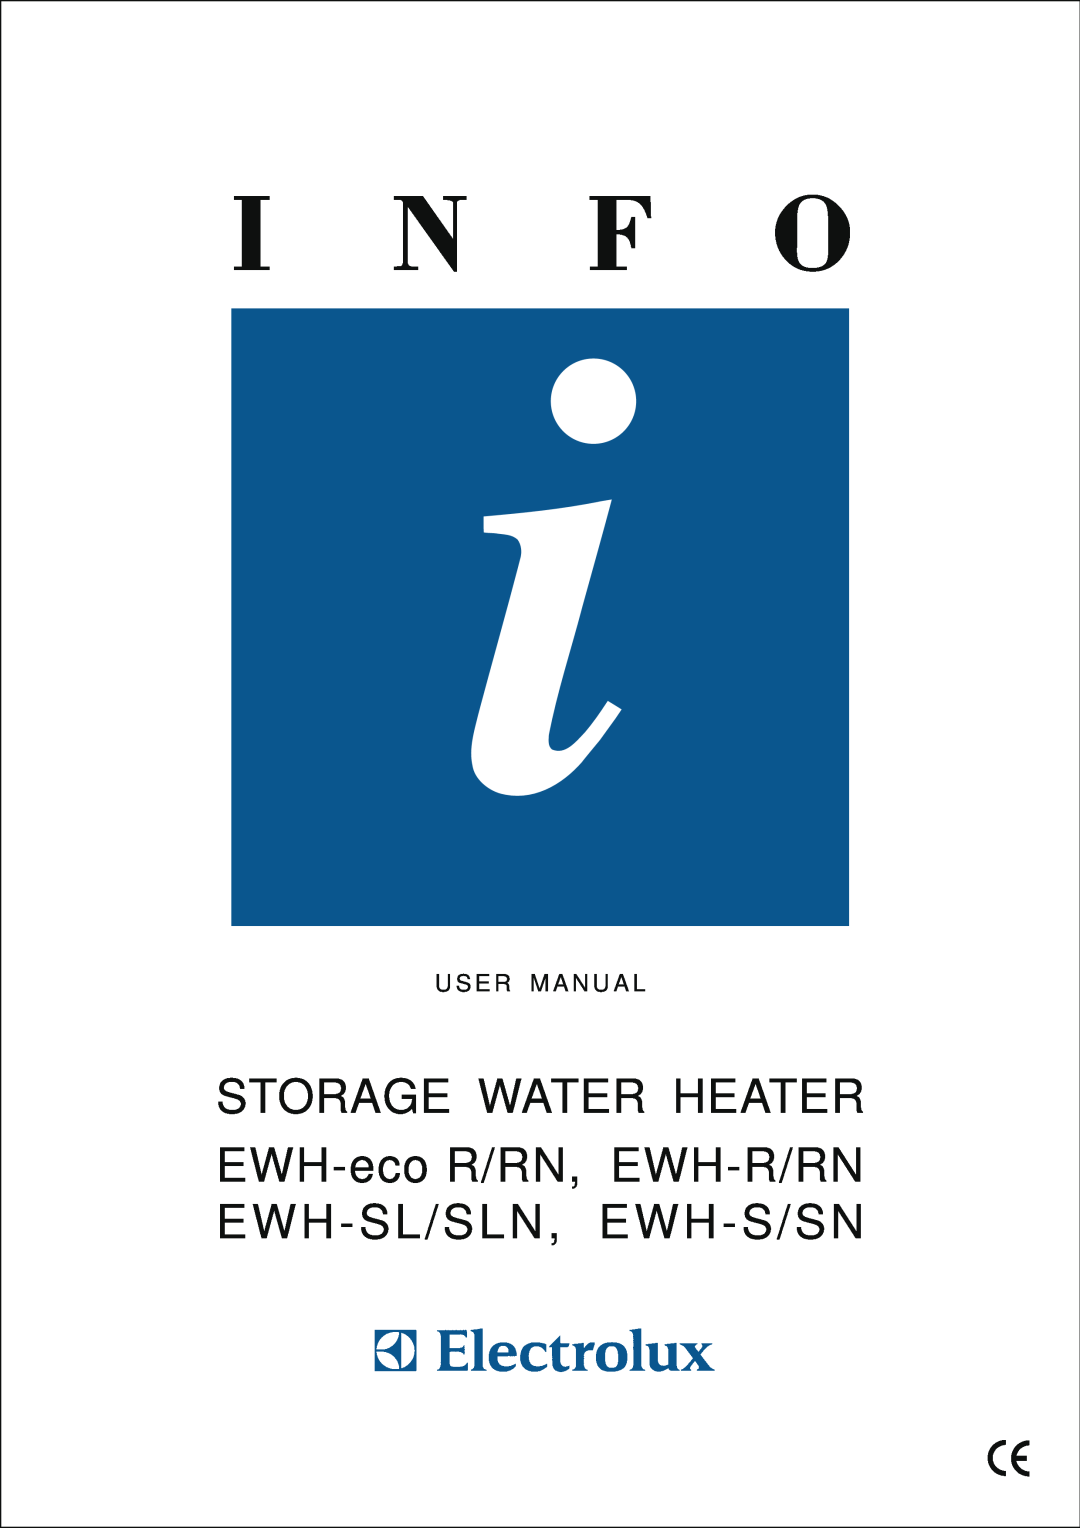 Electrolux user manual STORAGE WATER HEATER EWH-eco R/RN, EWH-R/RN EWH-SL/SLN, EWH-S/SN, U S E R M A N U A L 